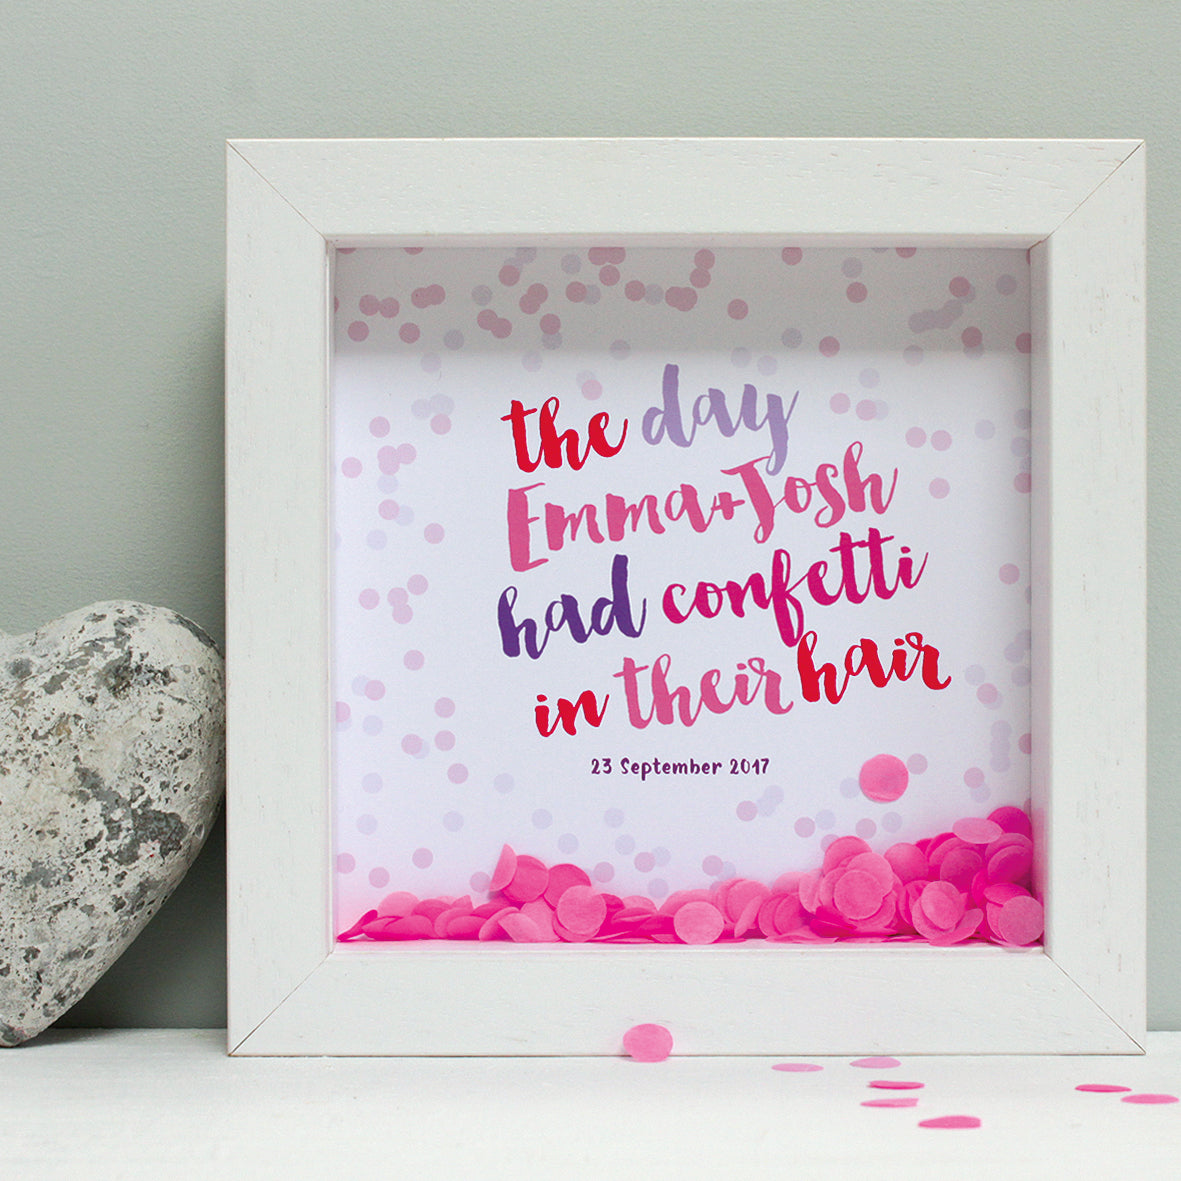 personalised dark pinks anniversary print with hot pink confetti, white box frame